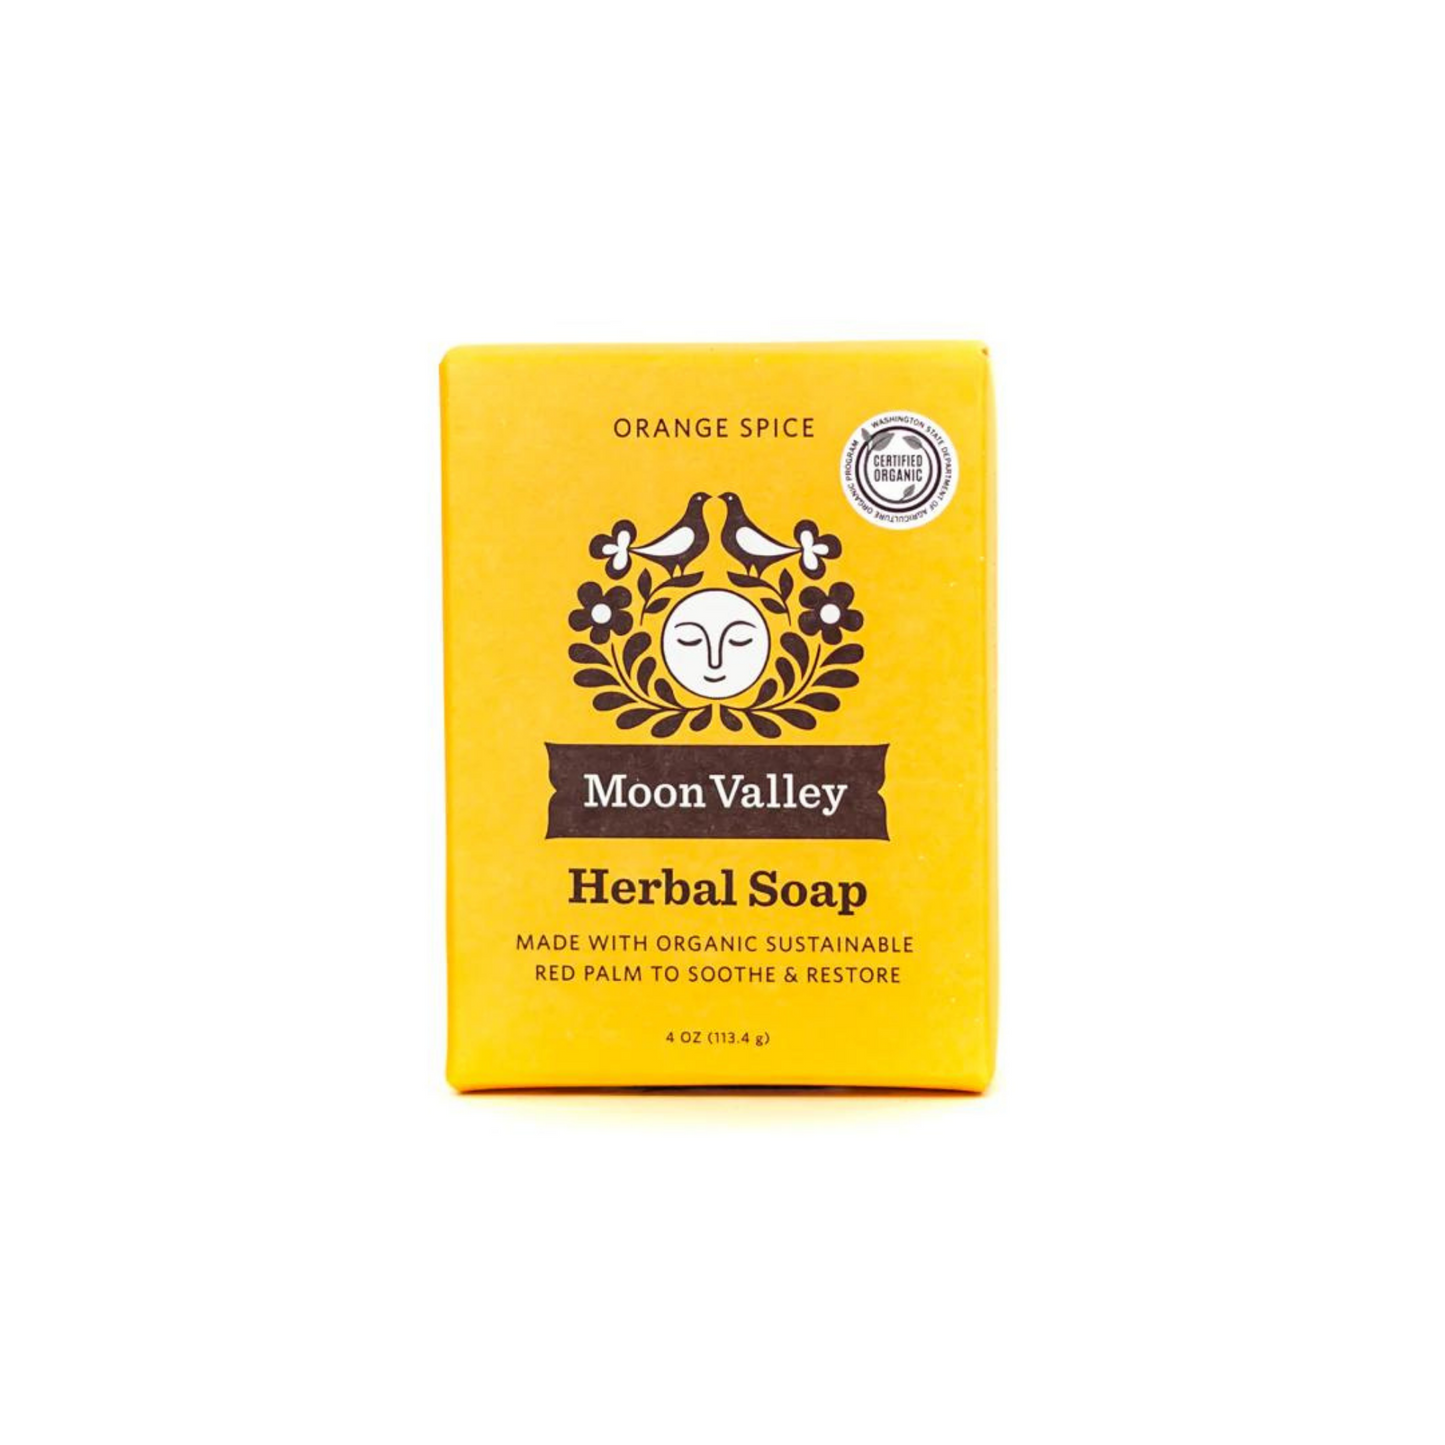 Primary Image of Orange Spice Herbal Soap